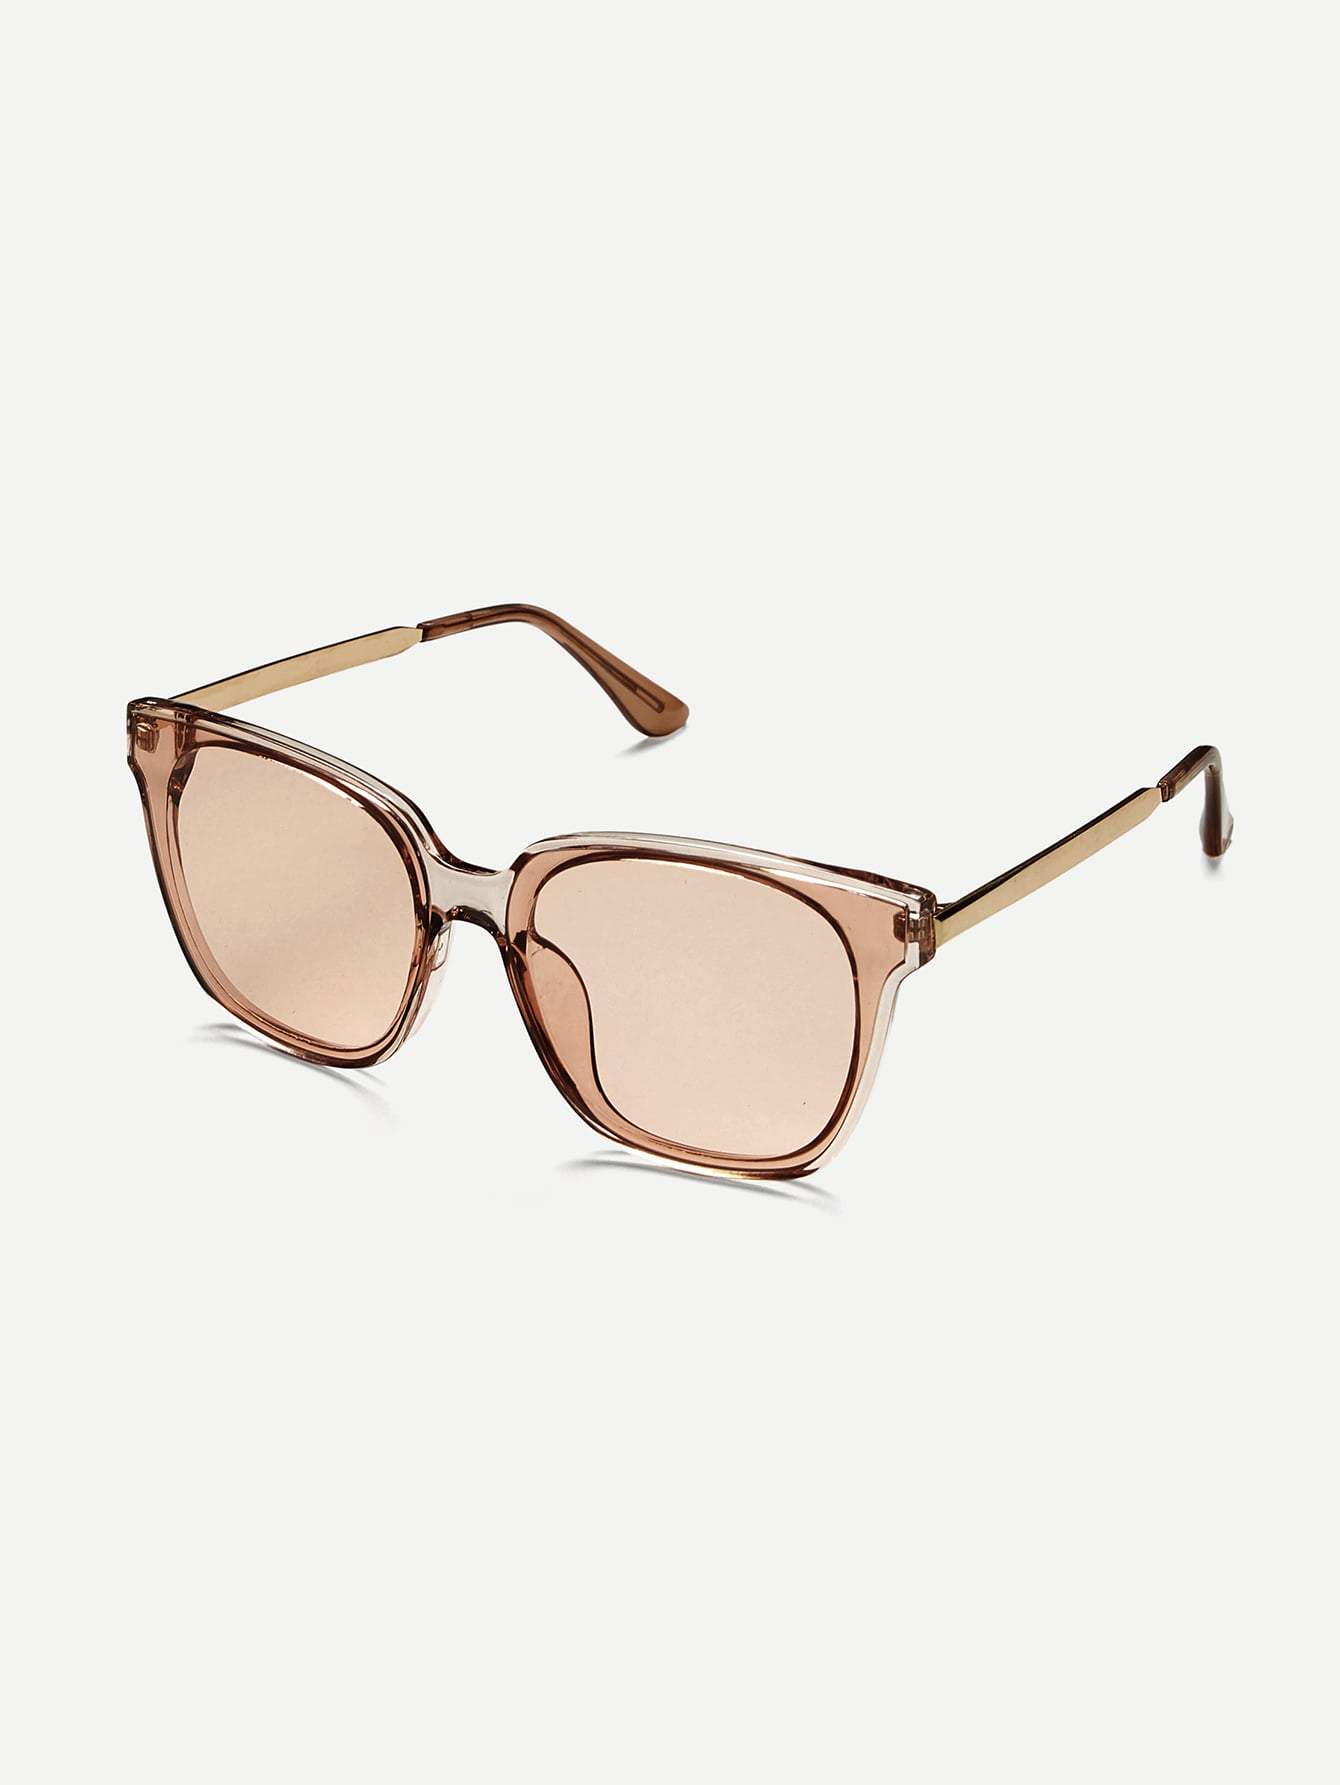 Tinted Brown Lens Sunglasses